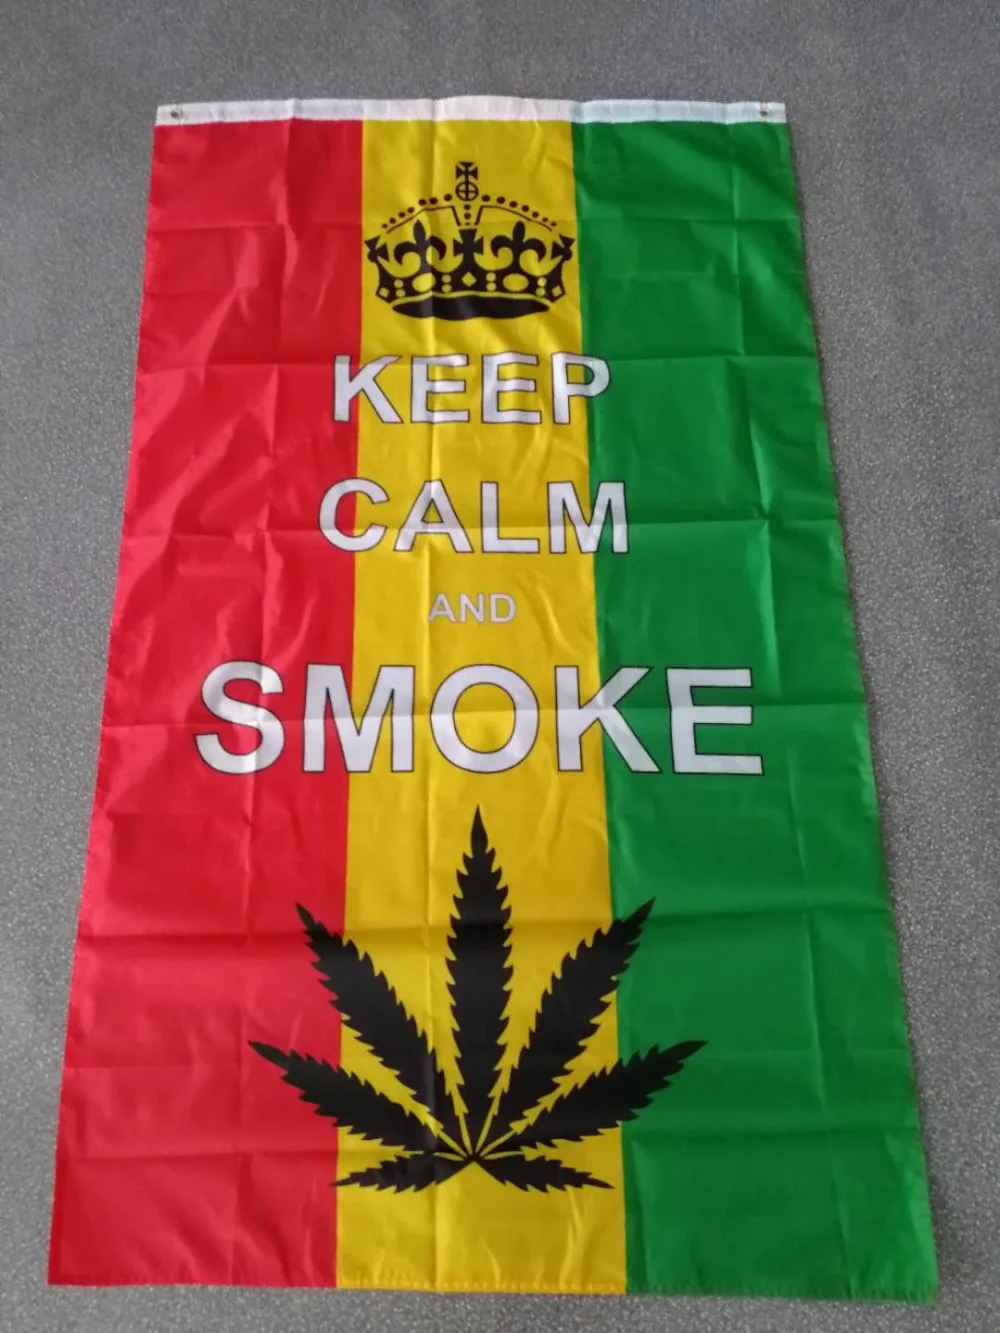 johnin 420 somewhere keep calm and smoke weed Reggae Rasta Leaf Flag For Bar Party Music Festival Tattoo Shop